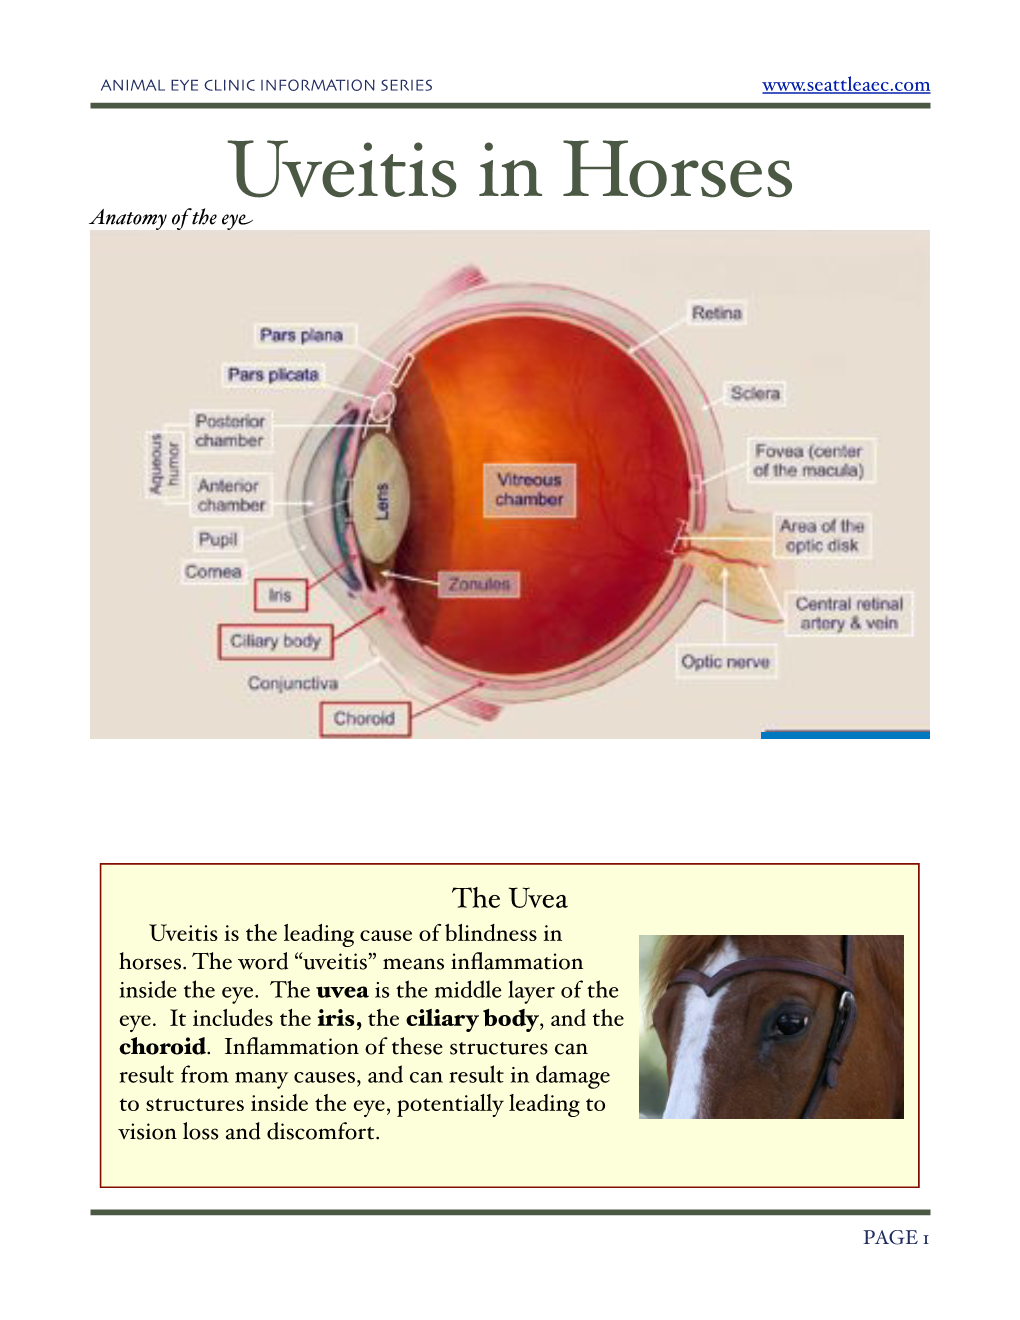 Uveitis in Horses Anatomy of the Eye